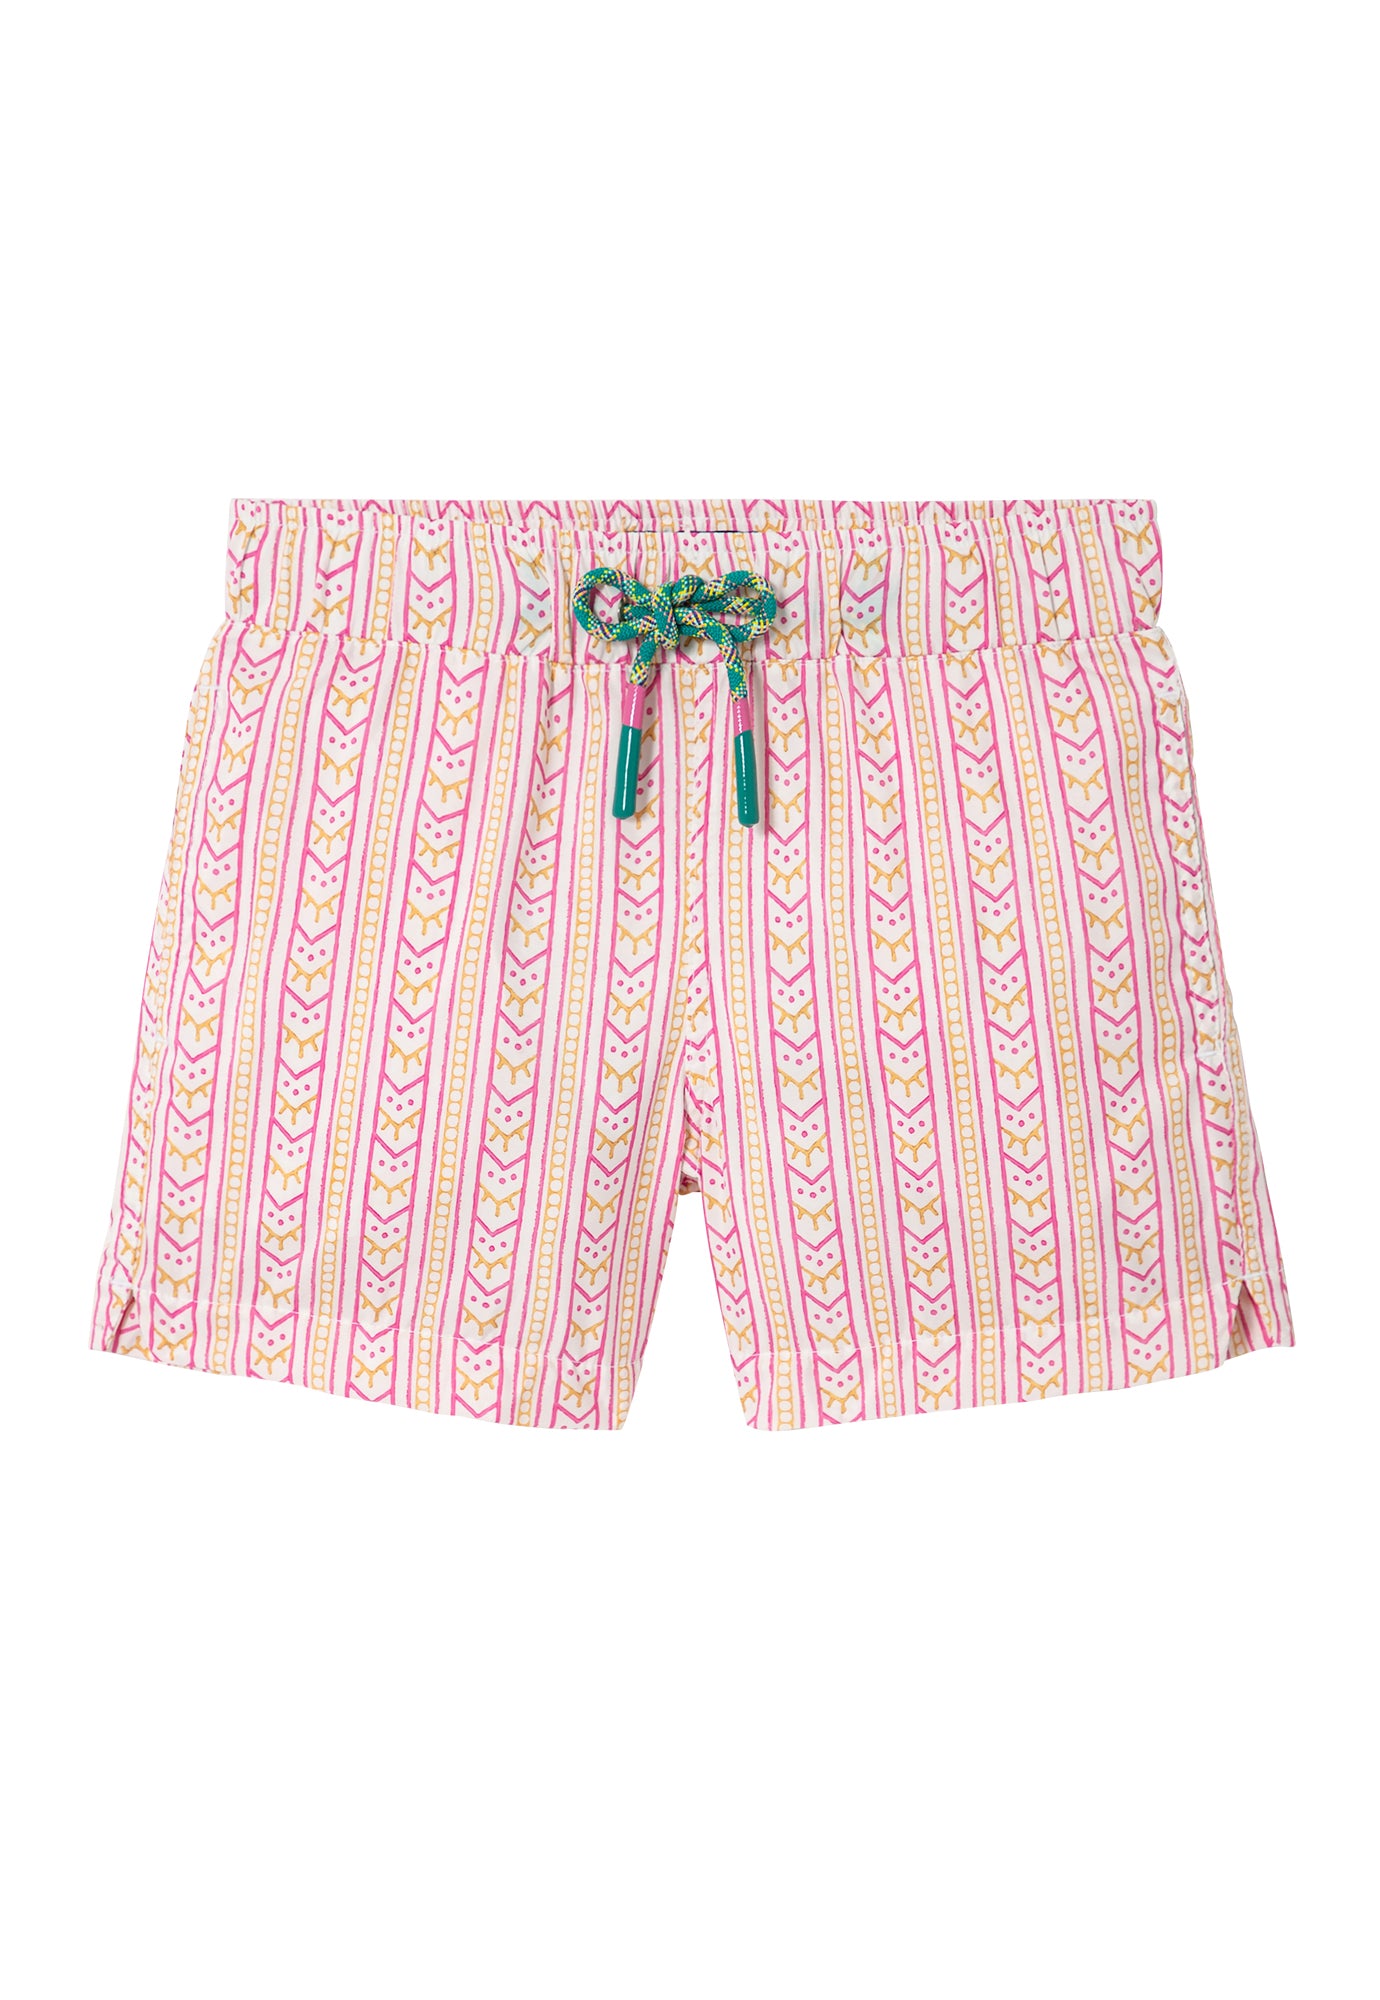 Printed swim shorts, Lison Paris X Amaia